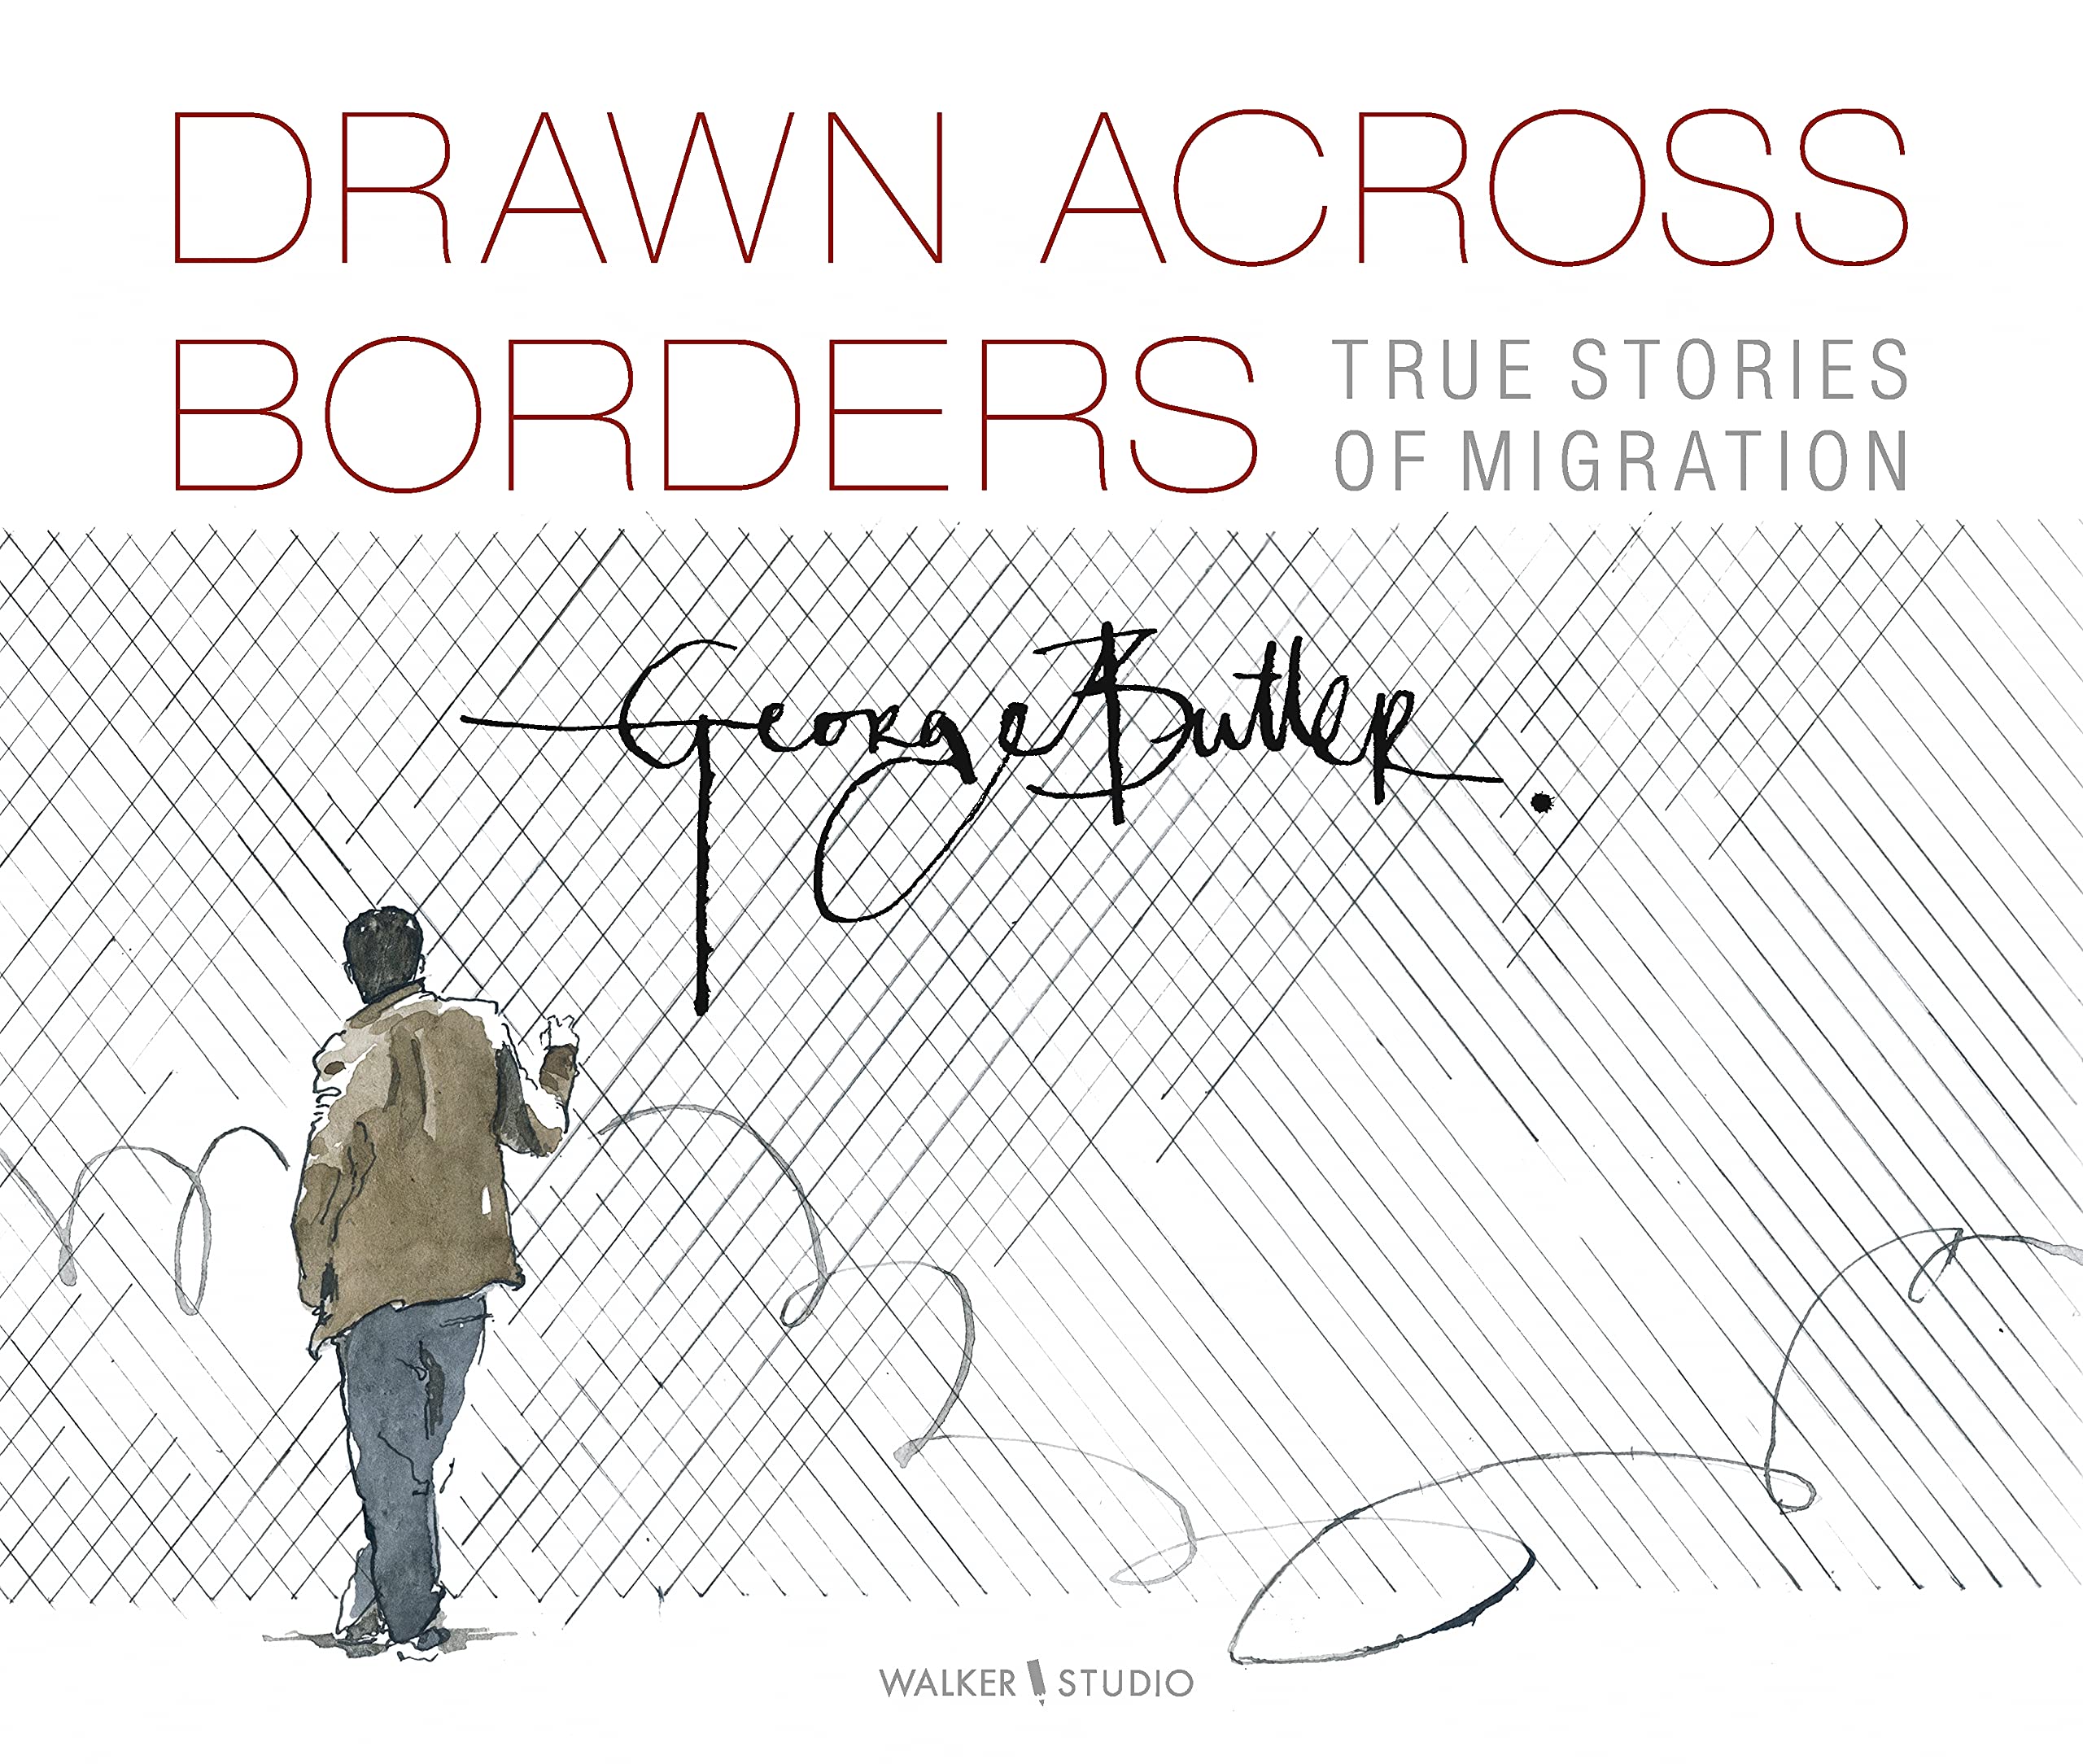 Drawn across borders (cover)